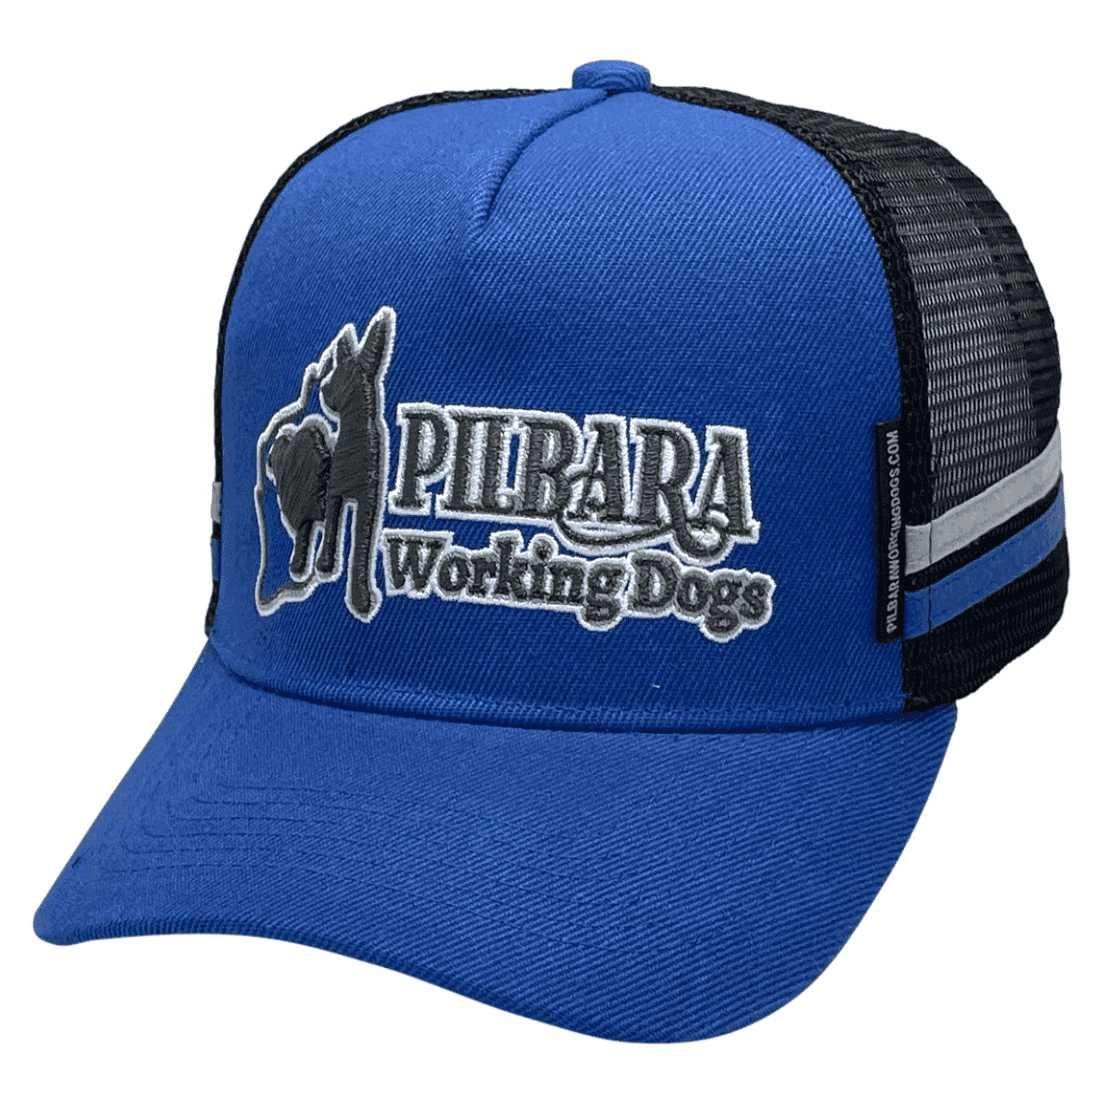 Pilbara Working Dogs LP Midrange Aussie Trucker Hats -Acrylic Royal